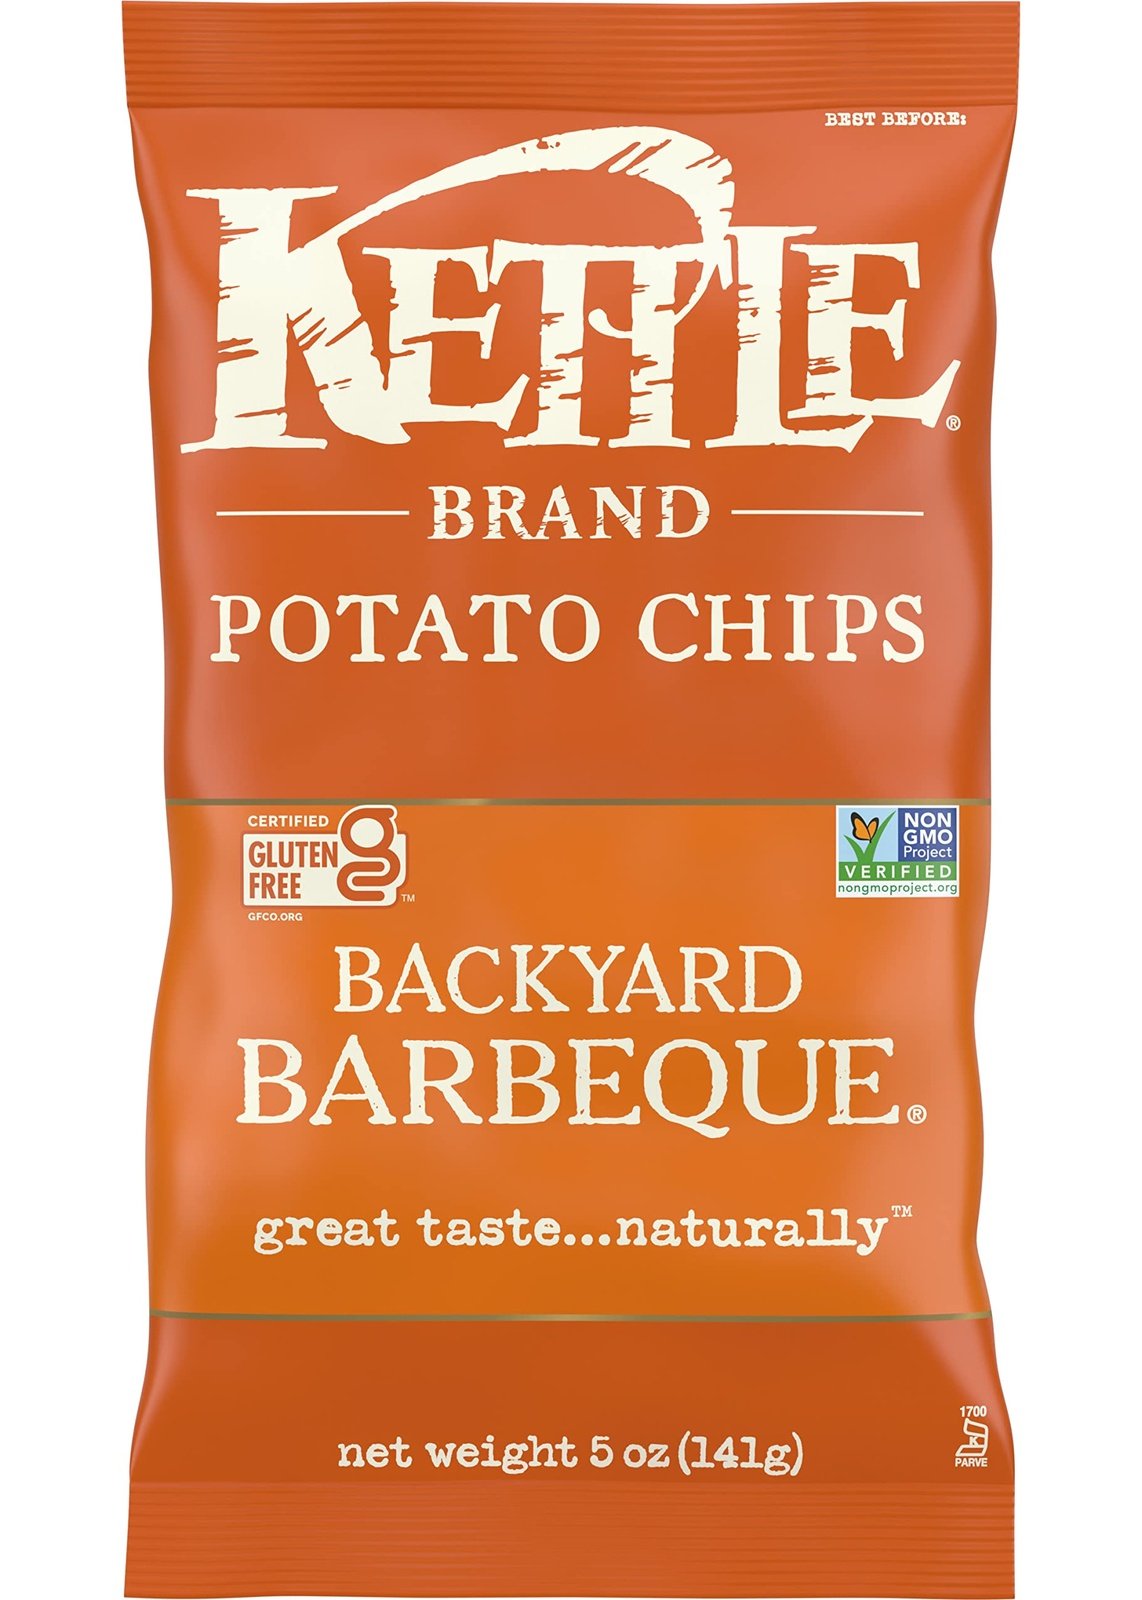 KETTLE Backyard Barbeque Chips 5oz